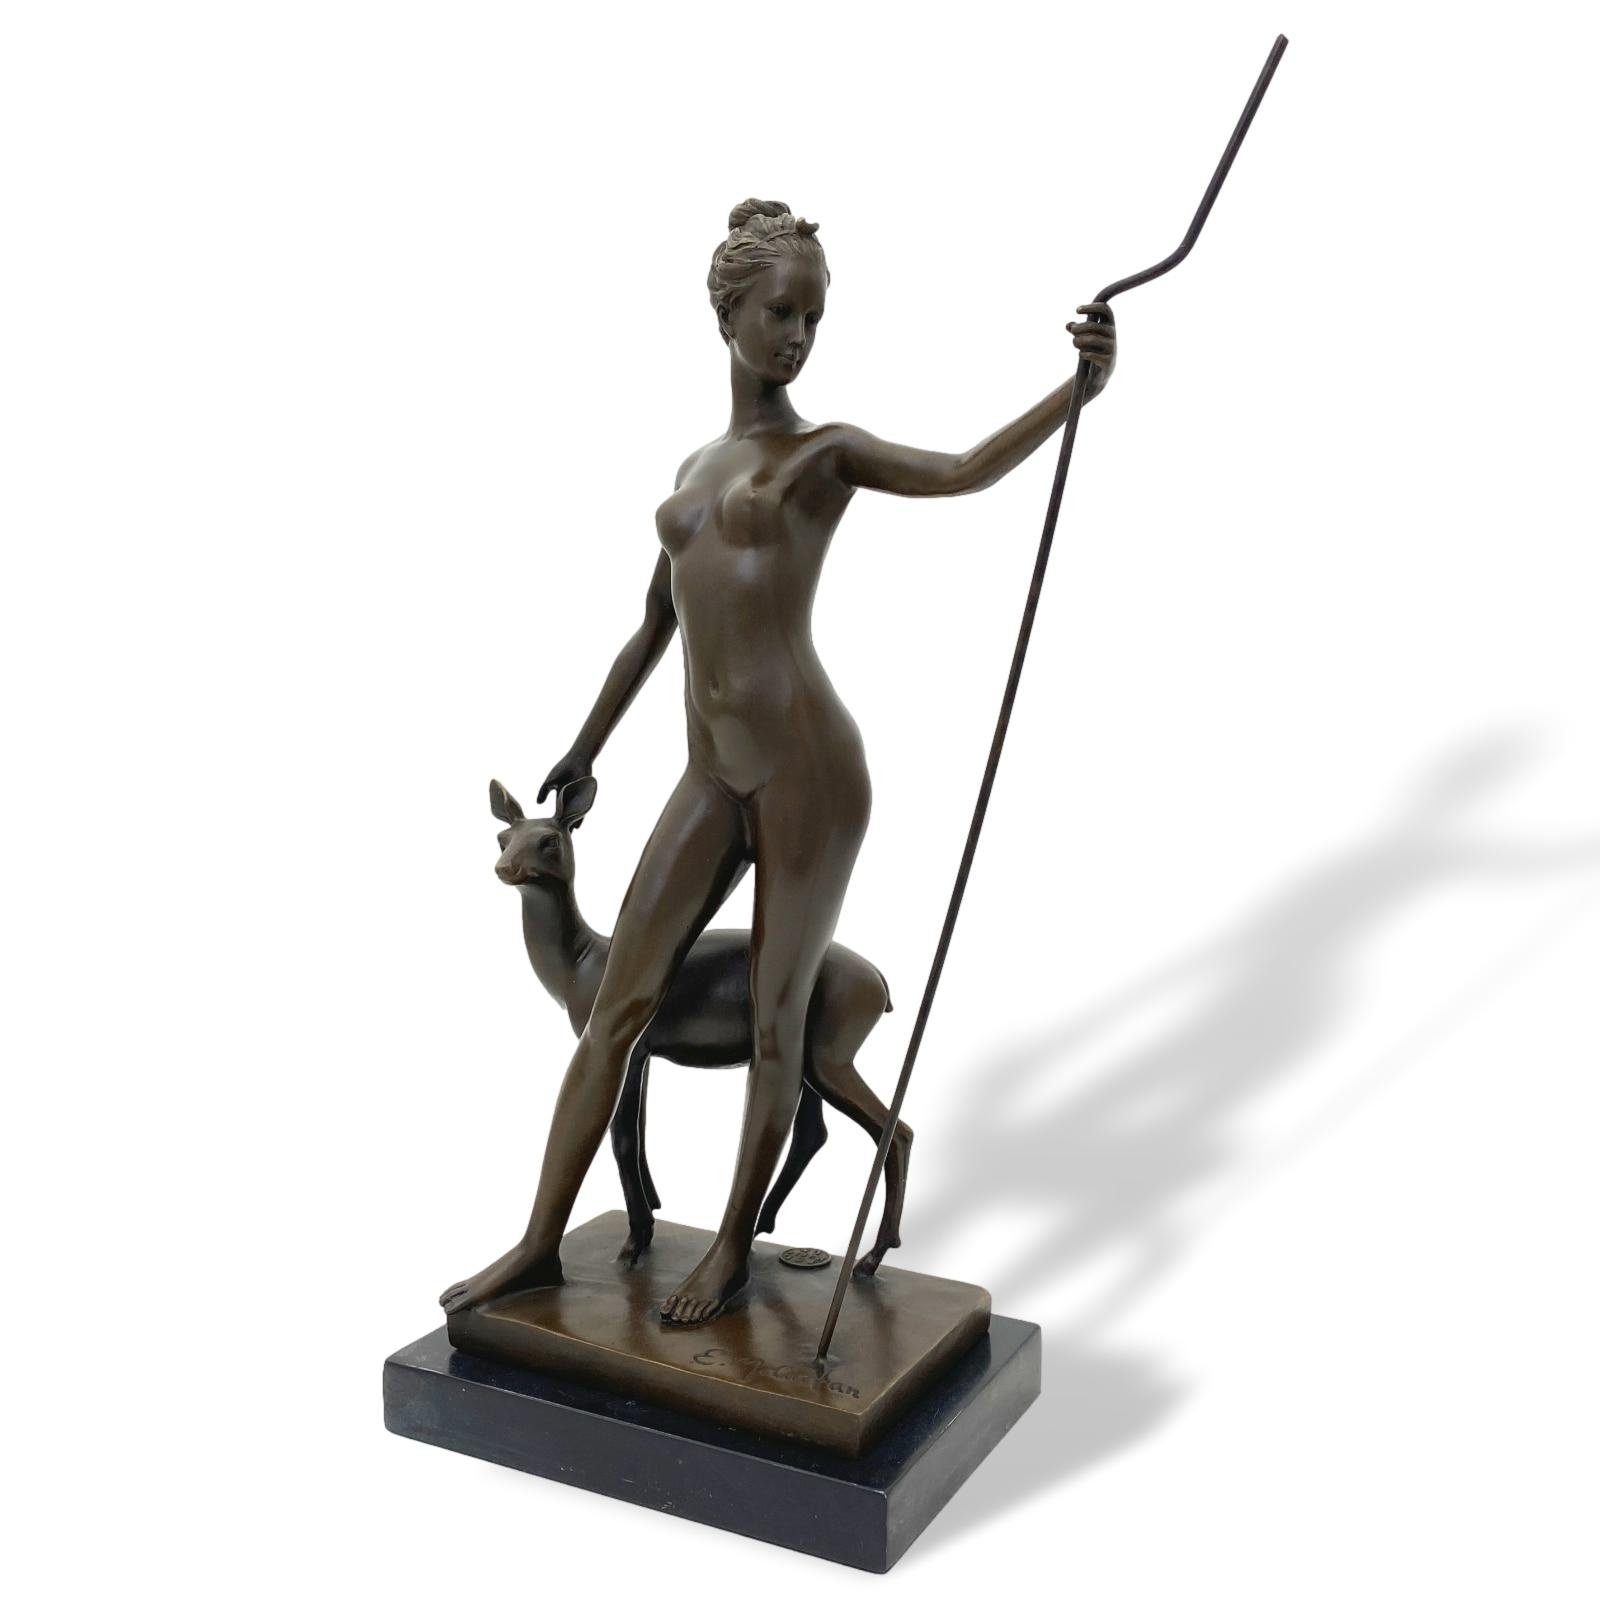 Aubaho Skulptur Bronzefigur Diana Göttin McCartan Skulptur Antik-S nach derJagd Bronze